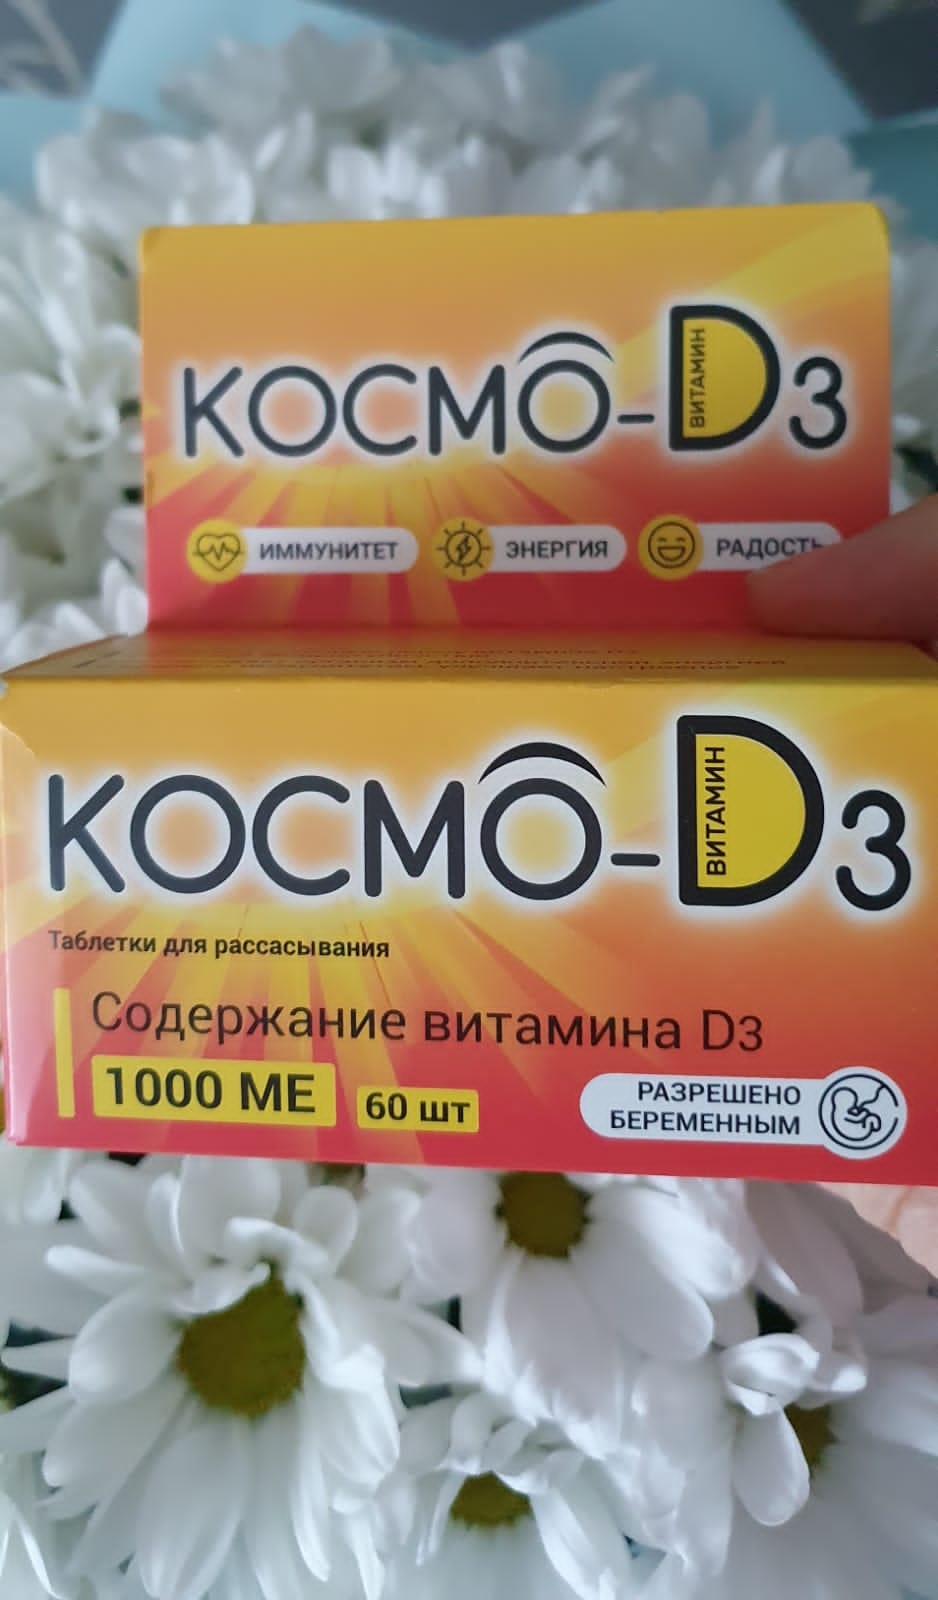 Космо D3 - Космо Д3 - для бодрости и иммунитета!